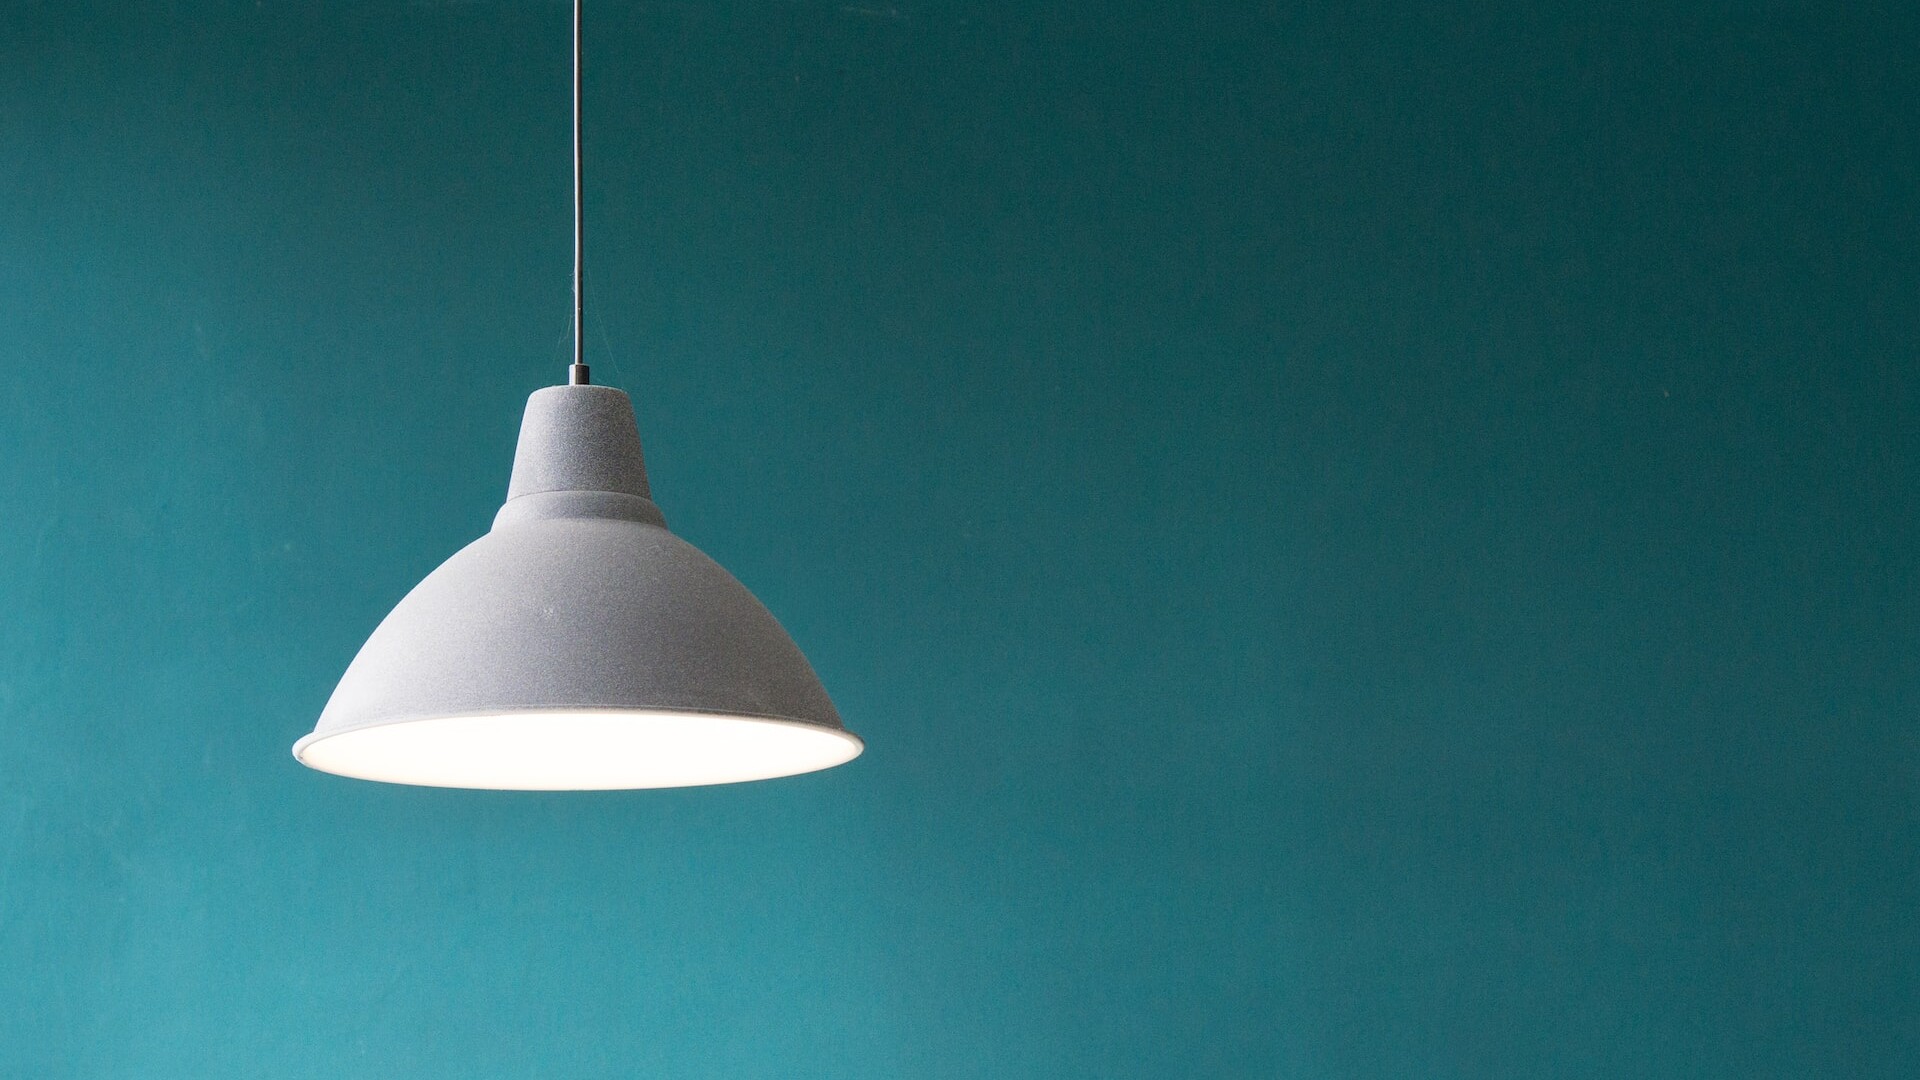 Simplistic design lamp on green background.